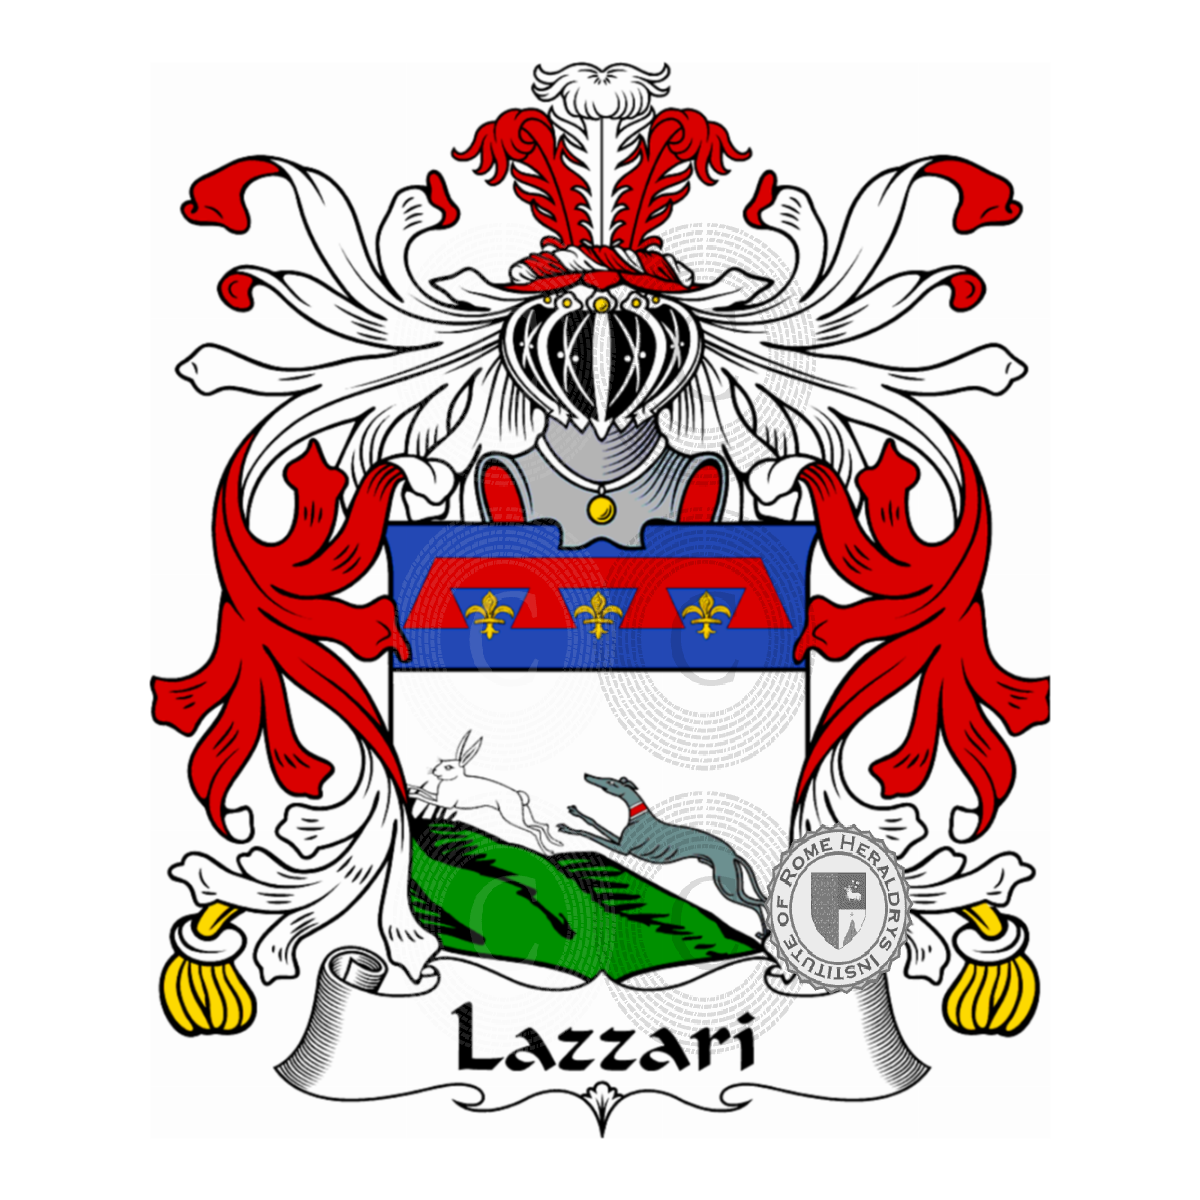 Brasão da famíliaLazzari, de Lazzari